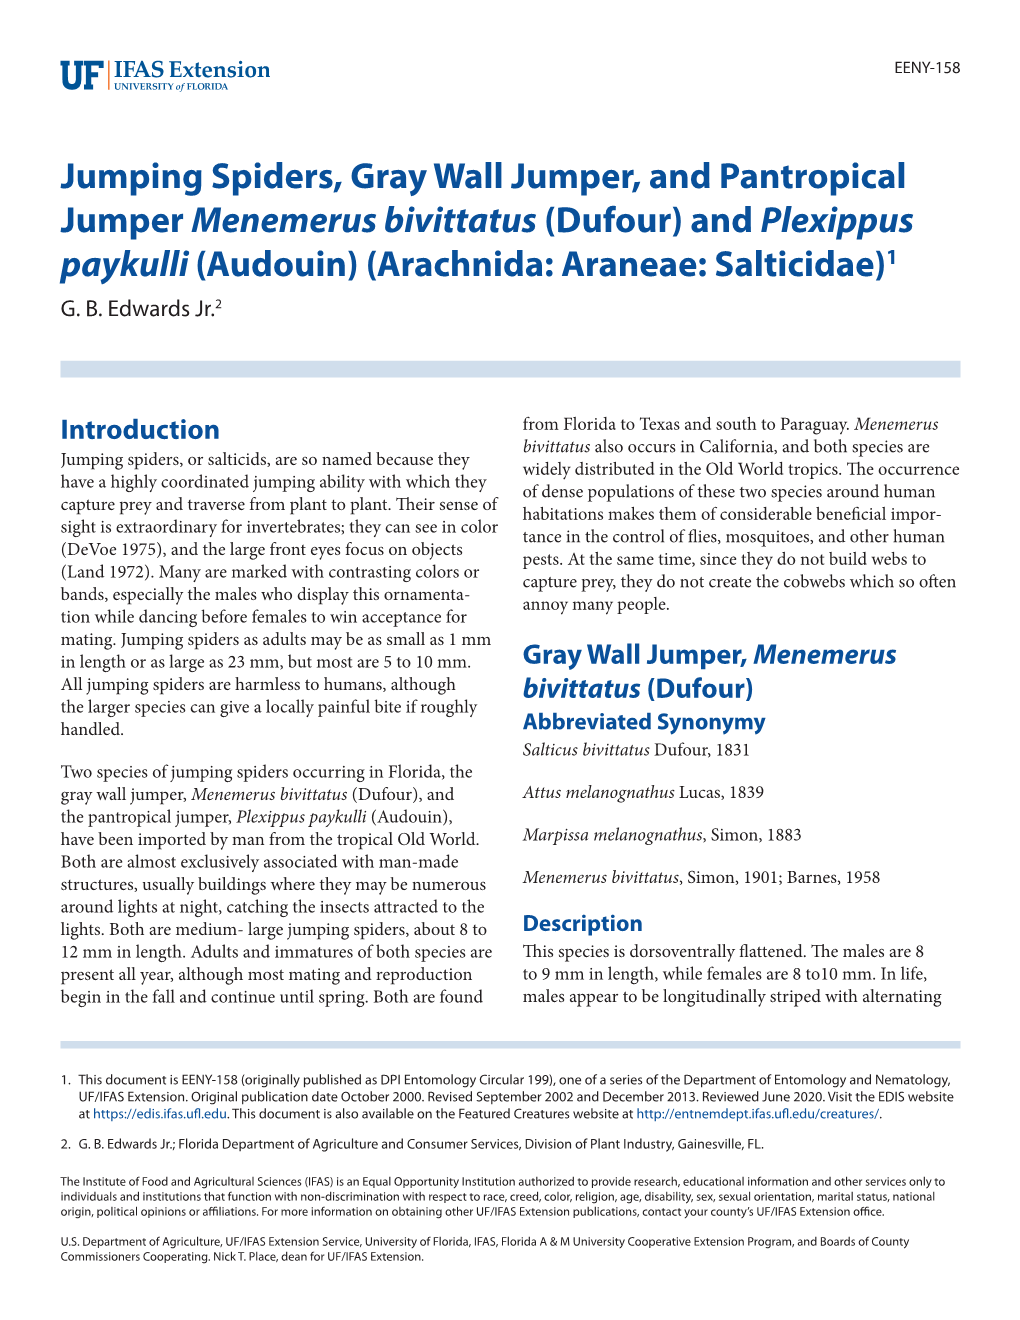 Jumping Spiders, Gray Wall Jumper, and Pantropical Jumper Menemerus Bivittatus (Dufour) and Plexippus Paykulli (Audouin) (Arachnida: Araneae: Salticidae)1 G